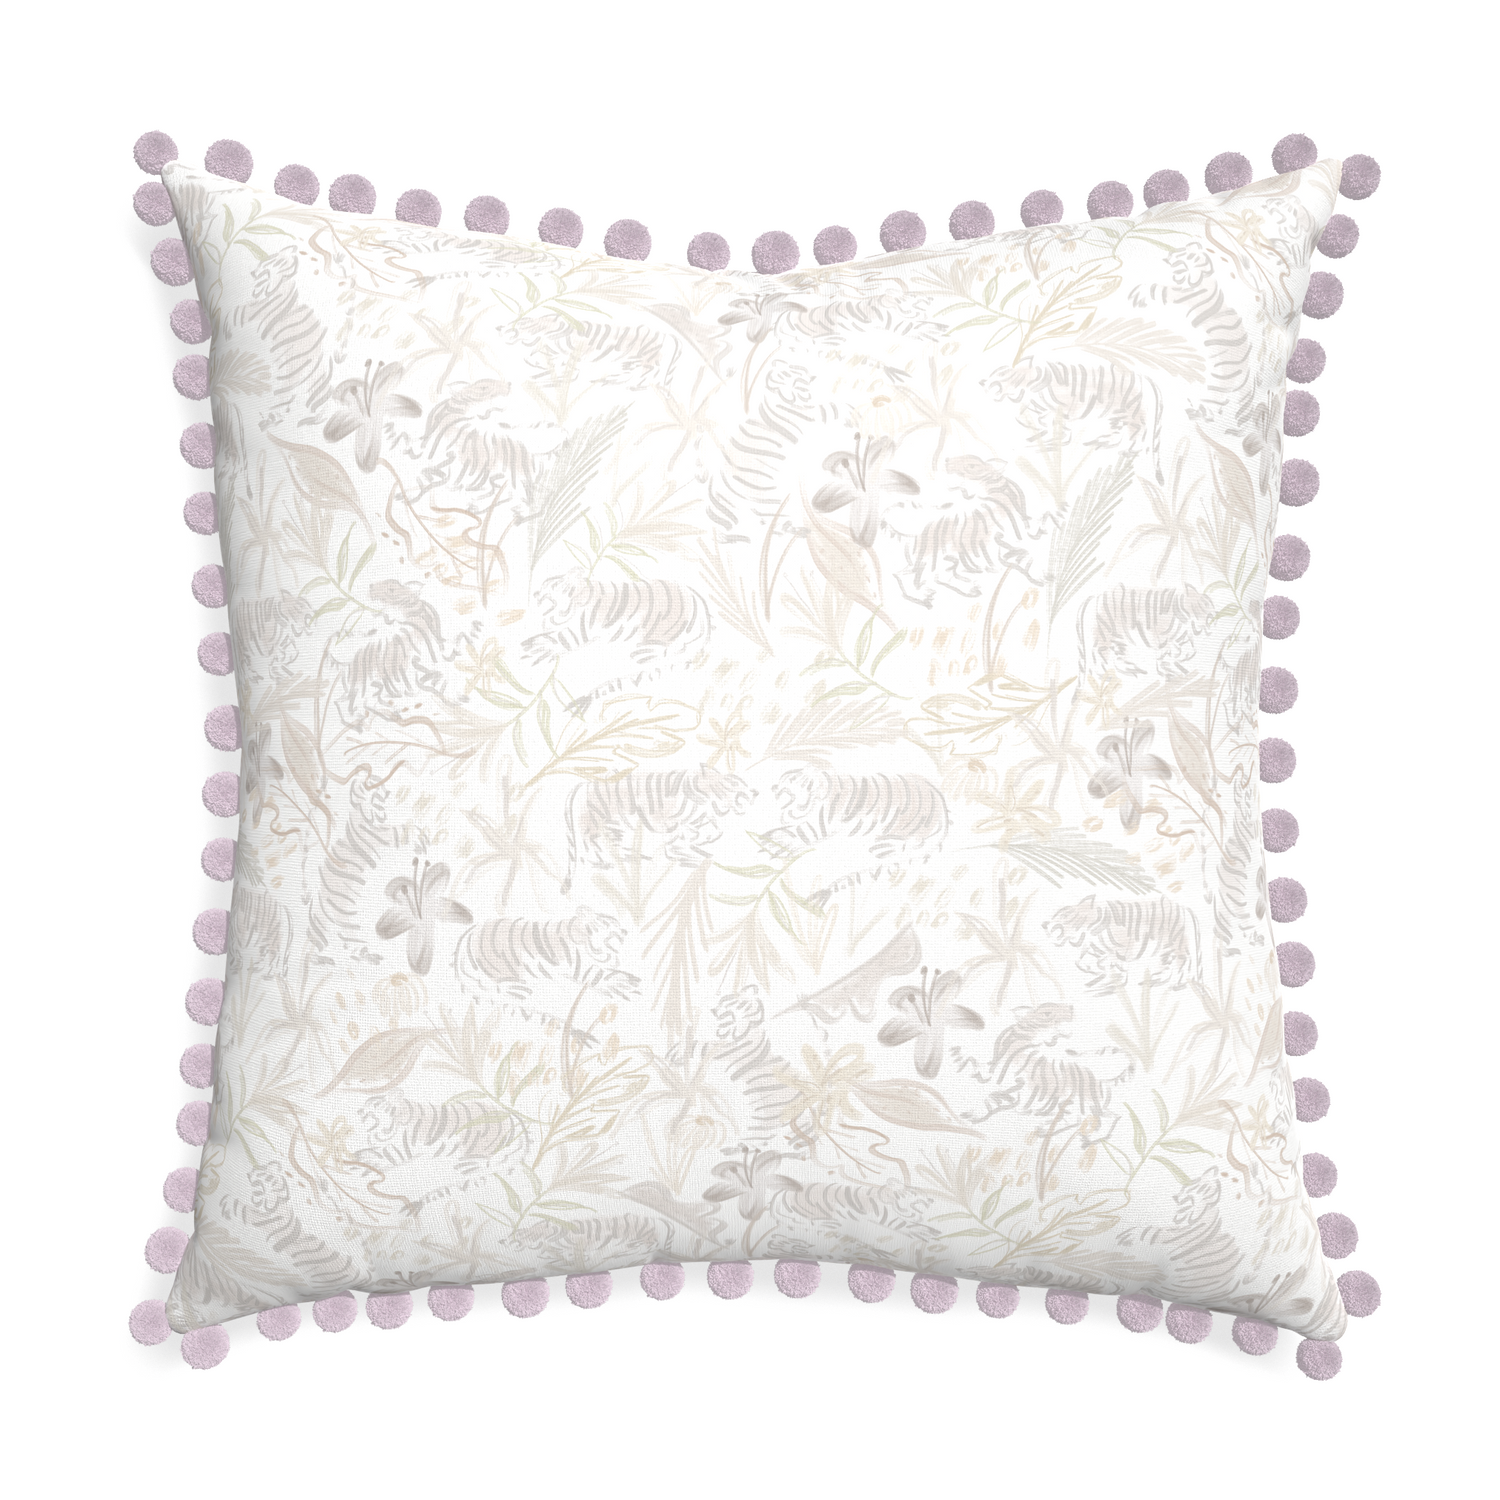 Euro-sham frida sand custom pillow with l on white background